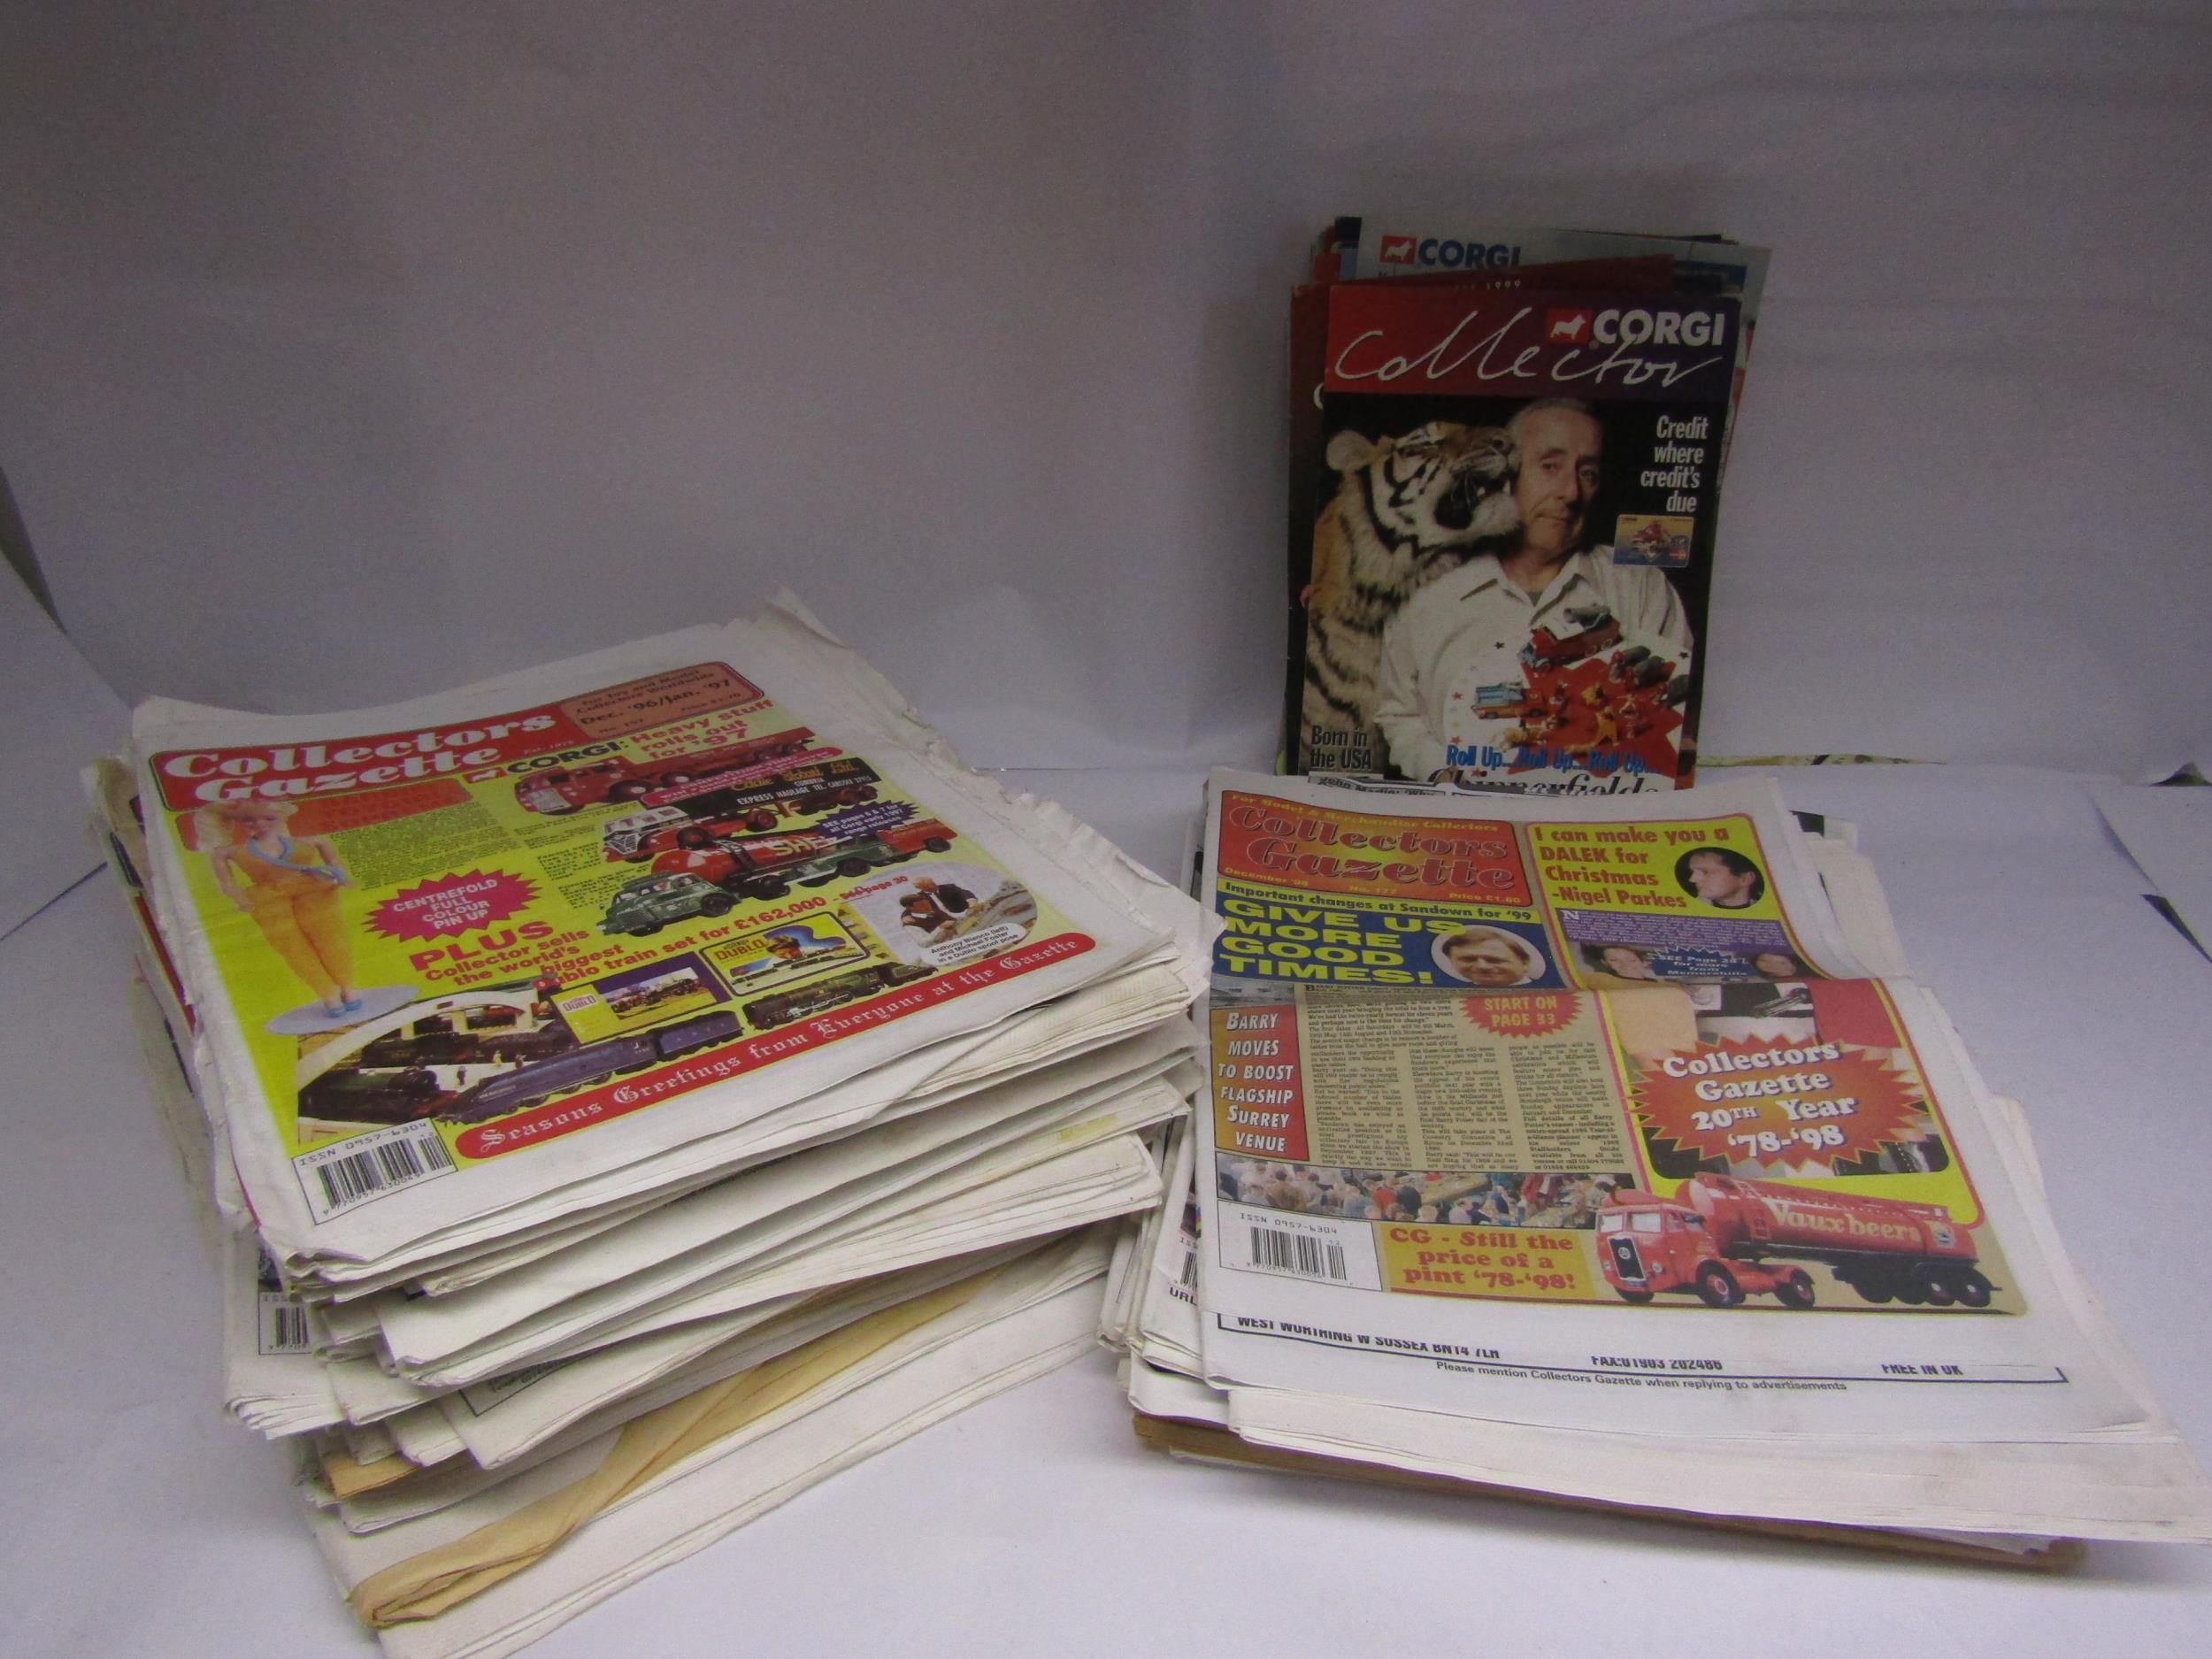 A collection of Collectors Gazette magazines